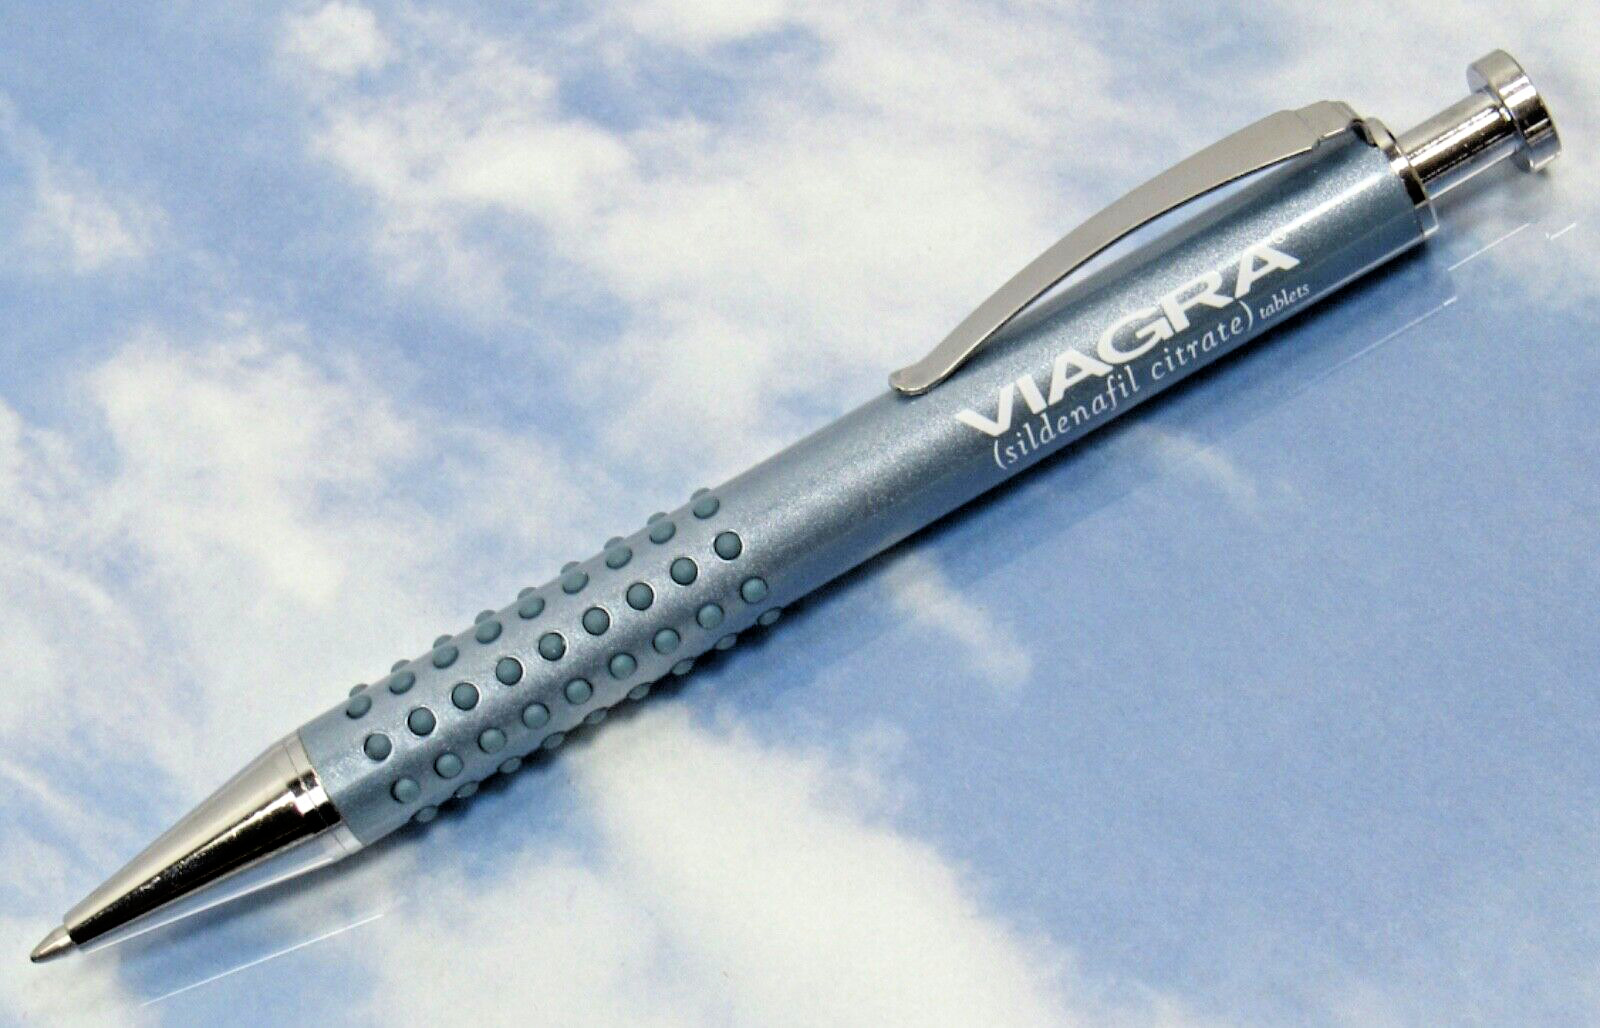 Metal Viagra Drug Rep Pharmaceutical Promo Pen Nailhead Clicker Bumpy Gripper